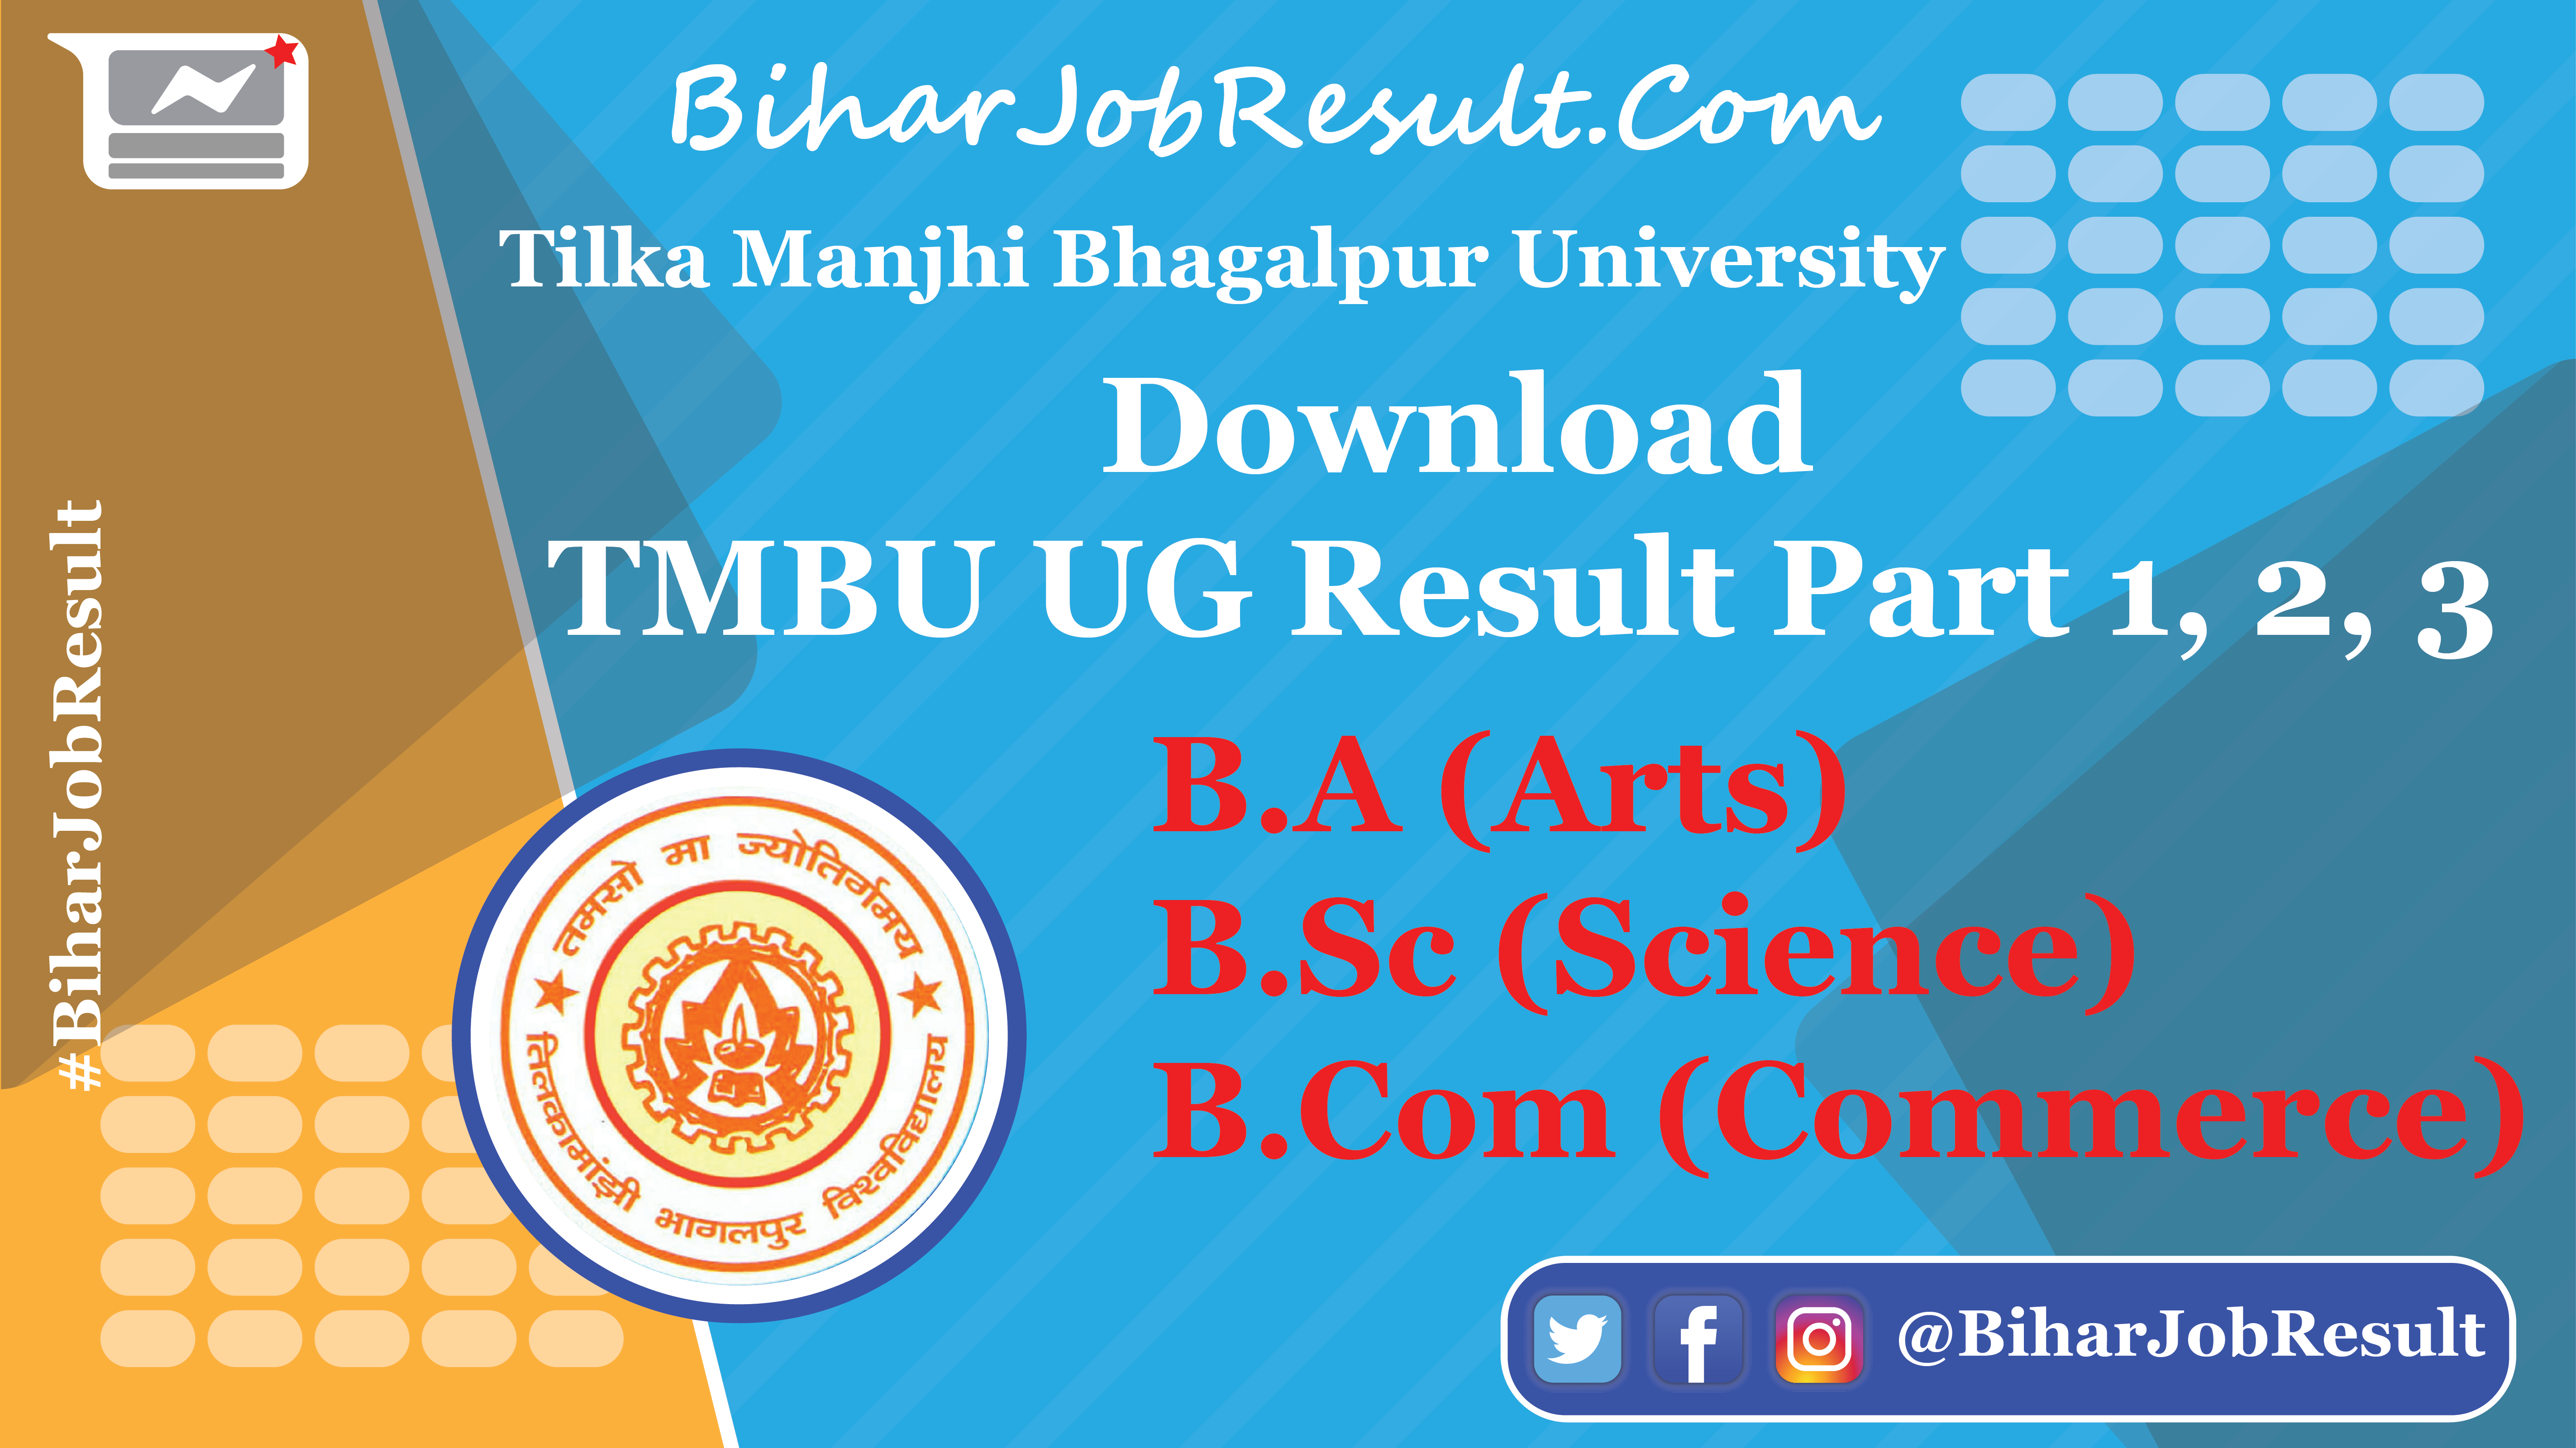 TMBU UG Result Part 1, 2, 3 | B.A (Arts), B.Sc (Science), B.Com (Commerce)